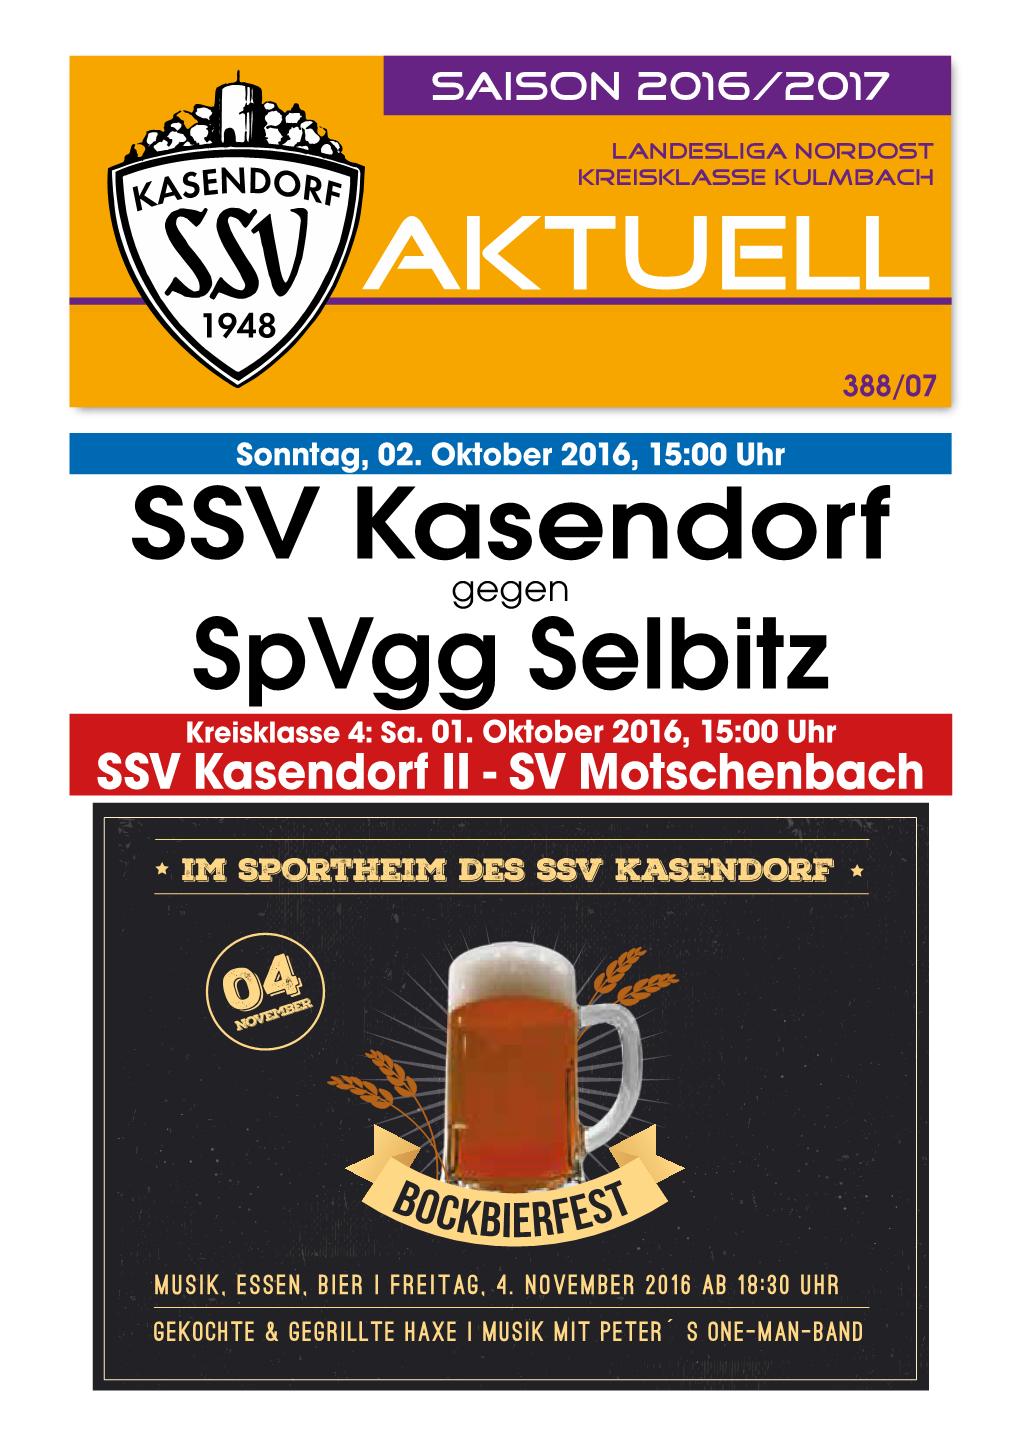 SSV Kasendorf Spvgg Selbitz